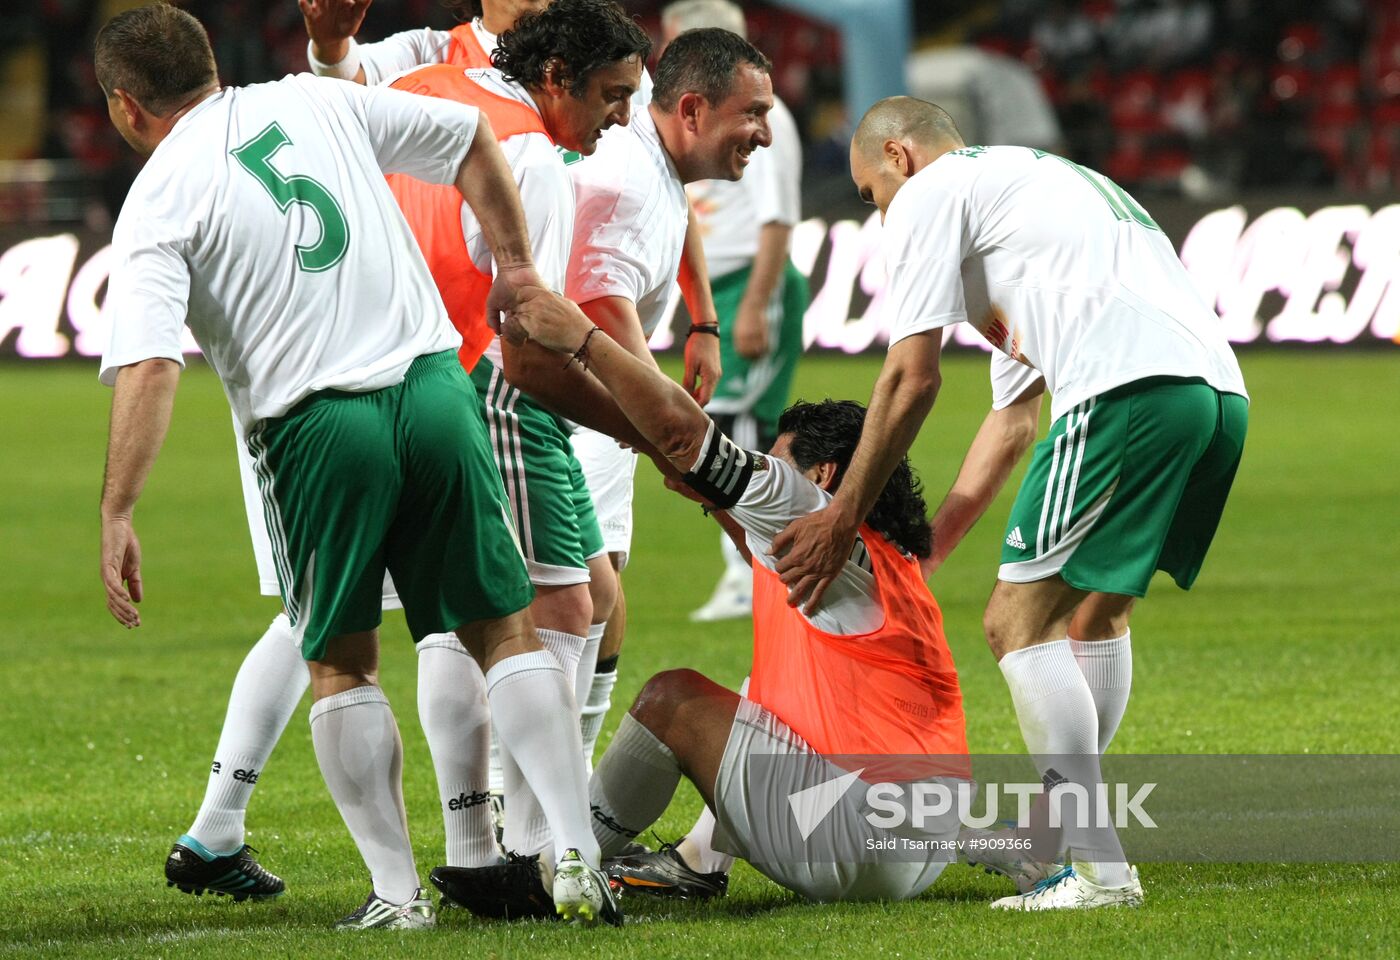 Match between "Caucasus" team and veteran world players